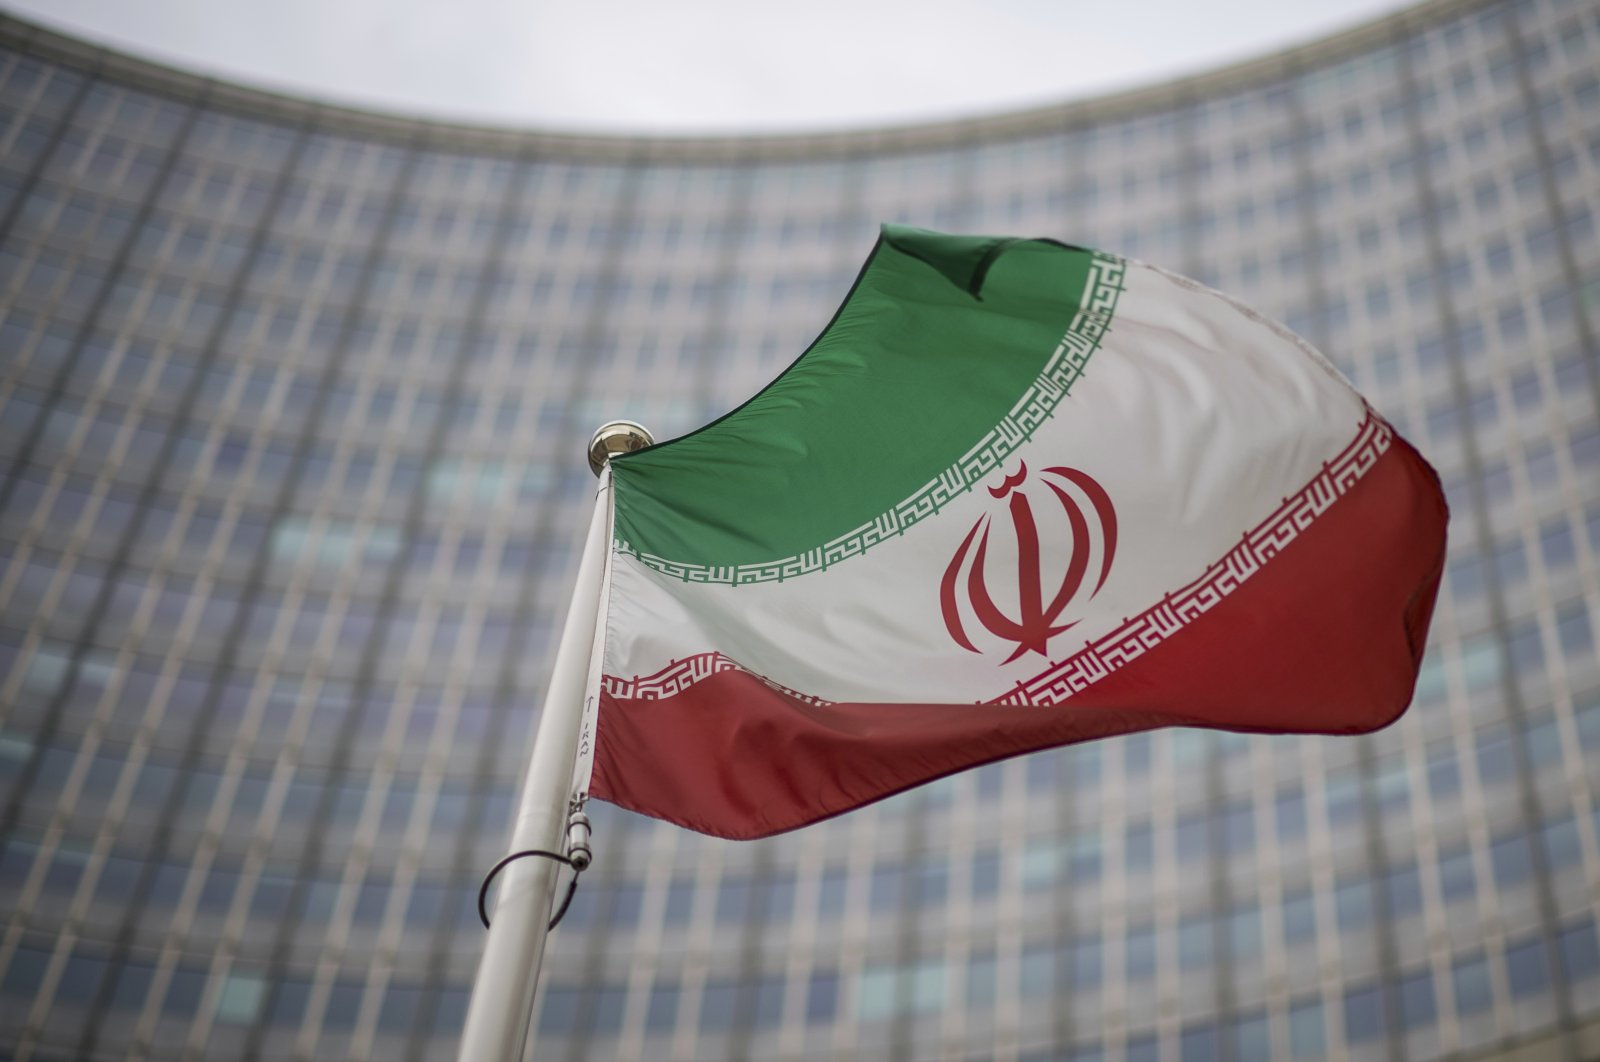 Kepala pengawas nuklir PBB bertemu dengan pejabat Teheran saat pembicaraan Iran hampir berakhir